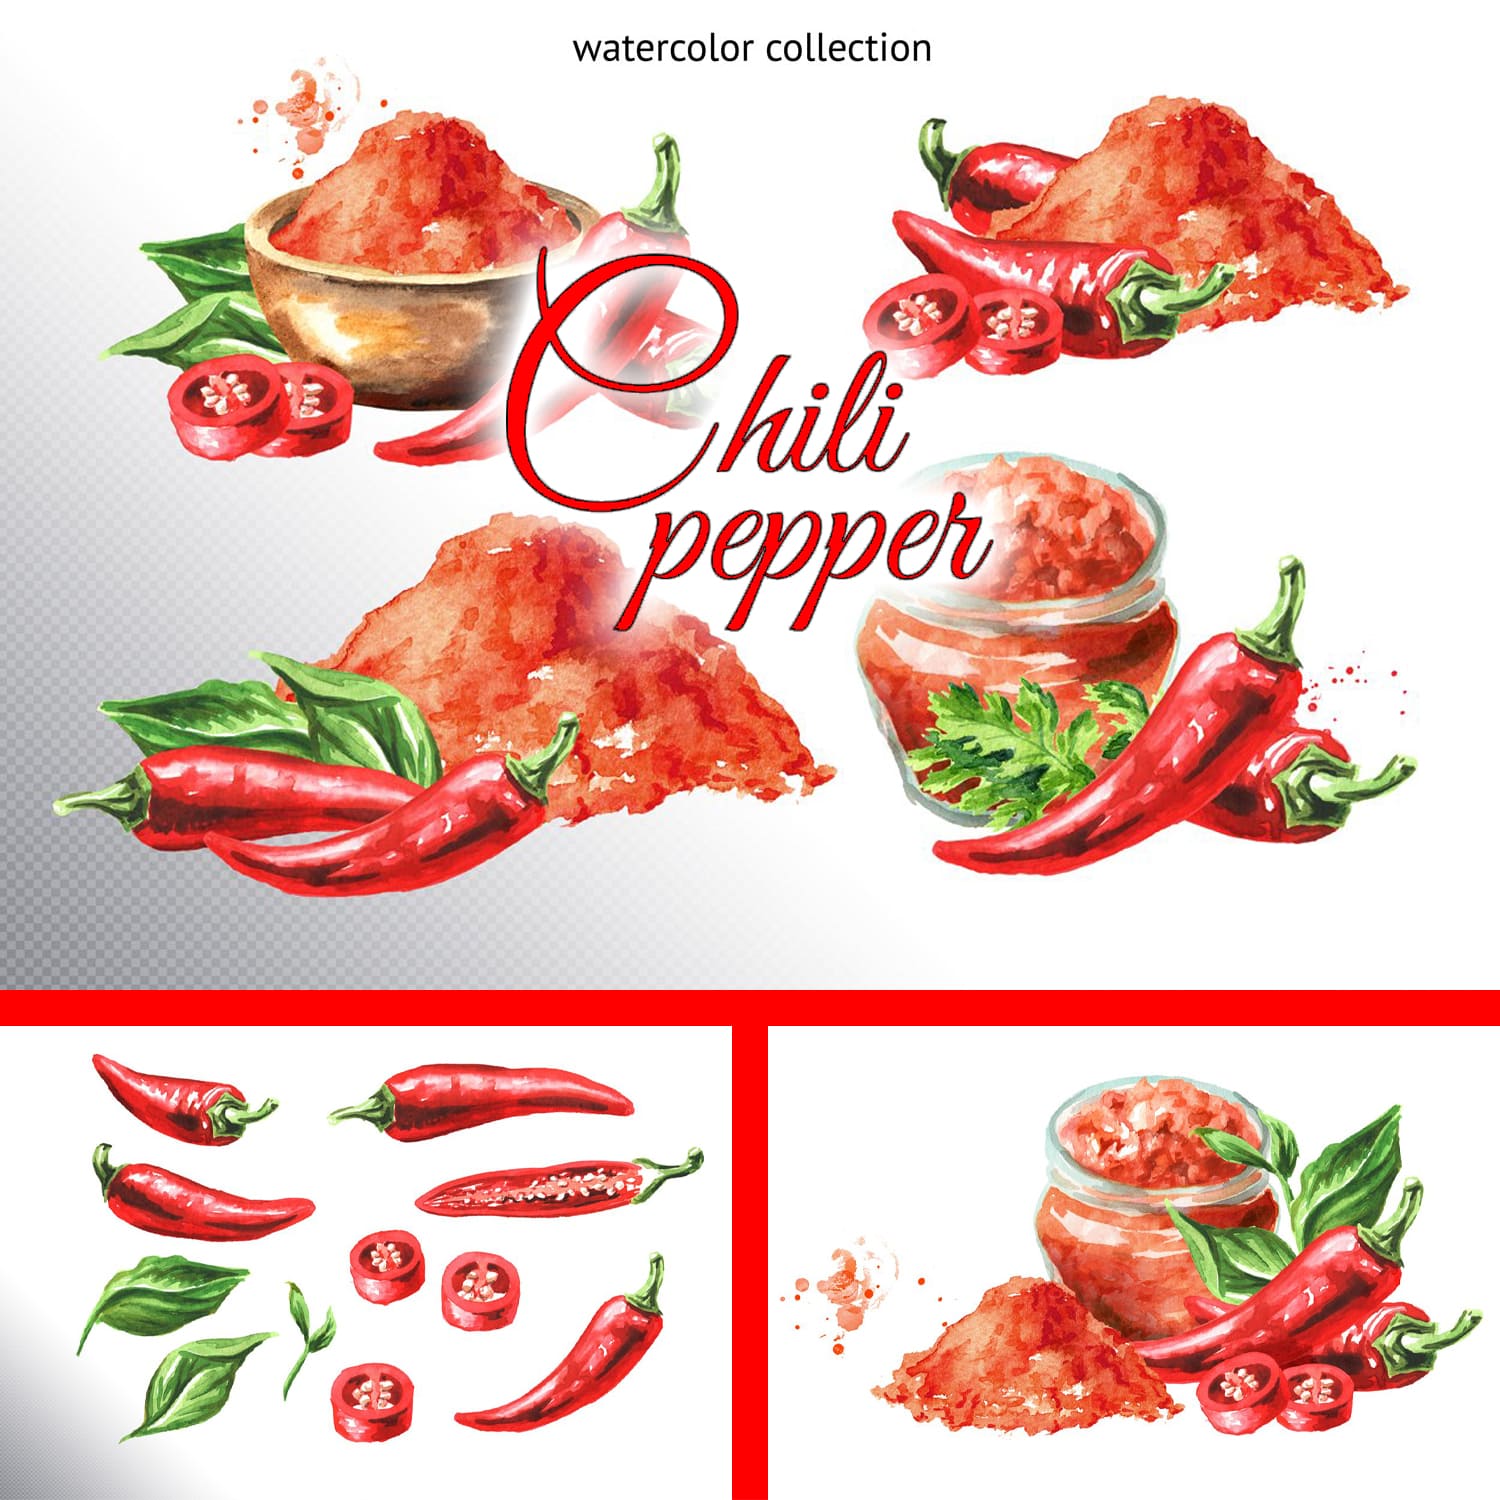 Chili pepper. Watercolor collection cover.